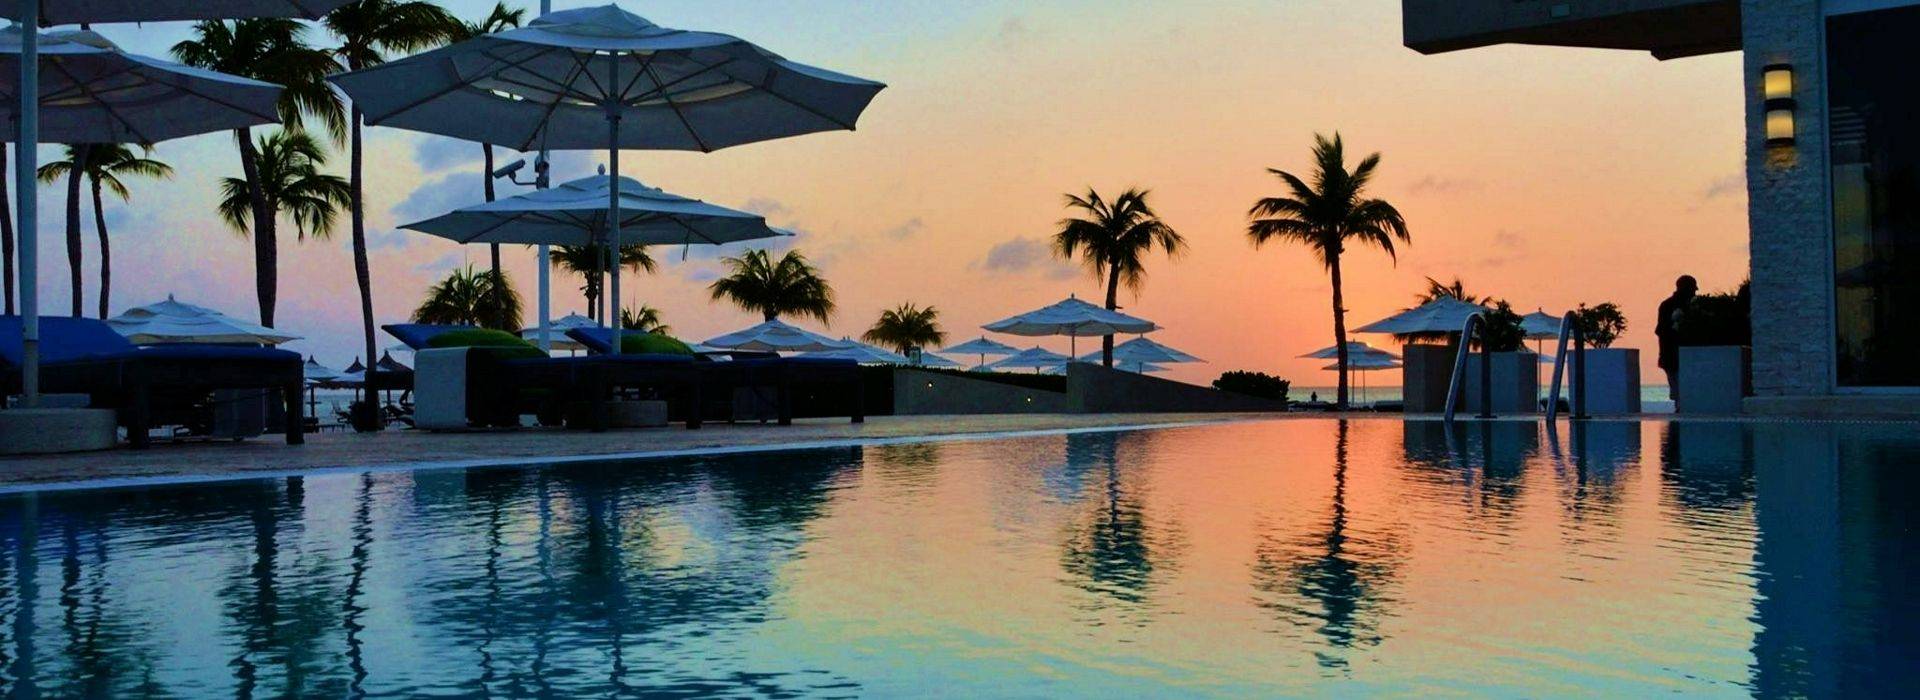 Bucuti-and-Tara-Beach-Resort-Pool-at-sunset-H.jpg